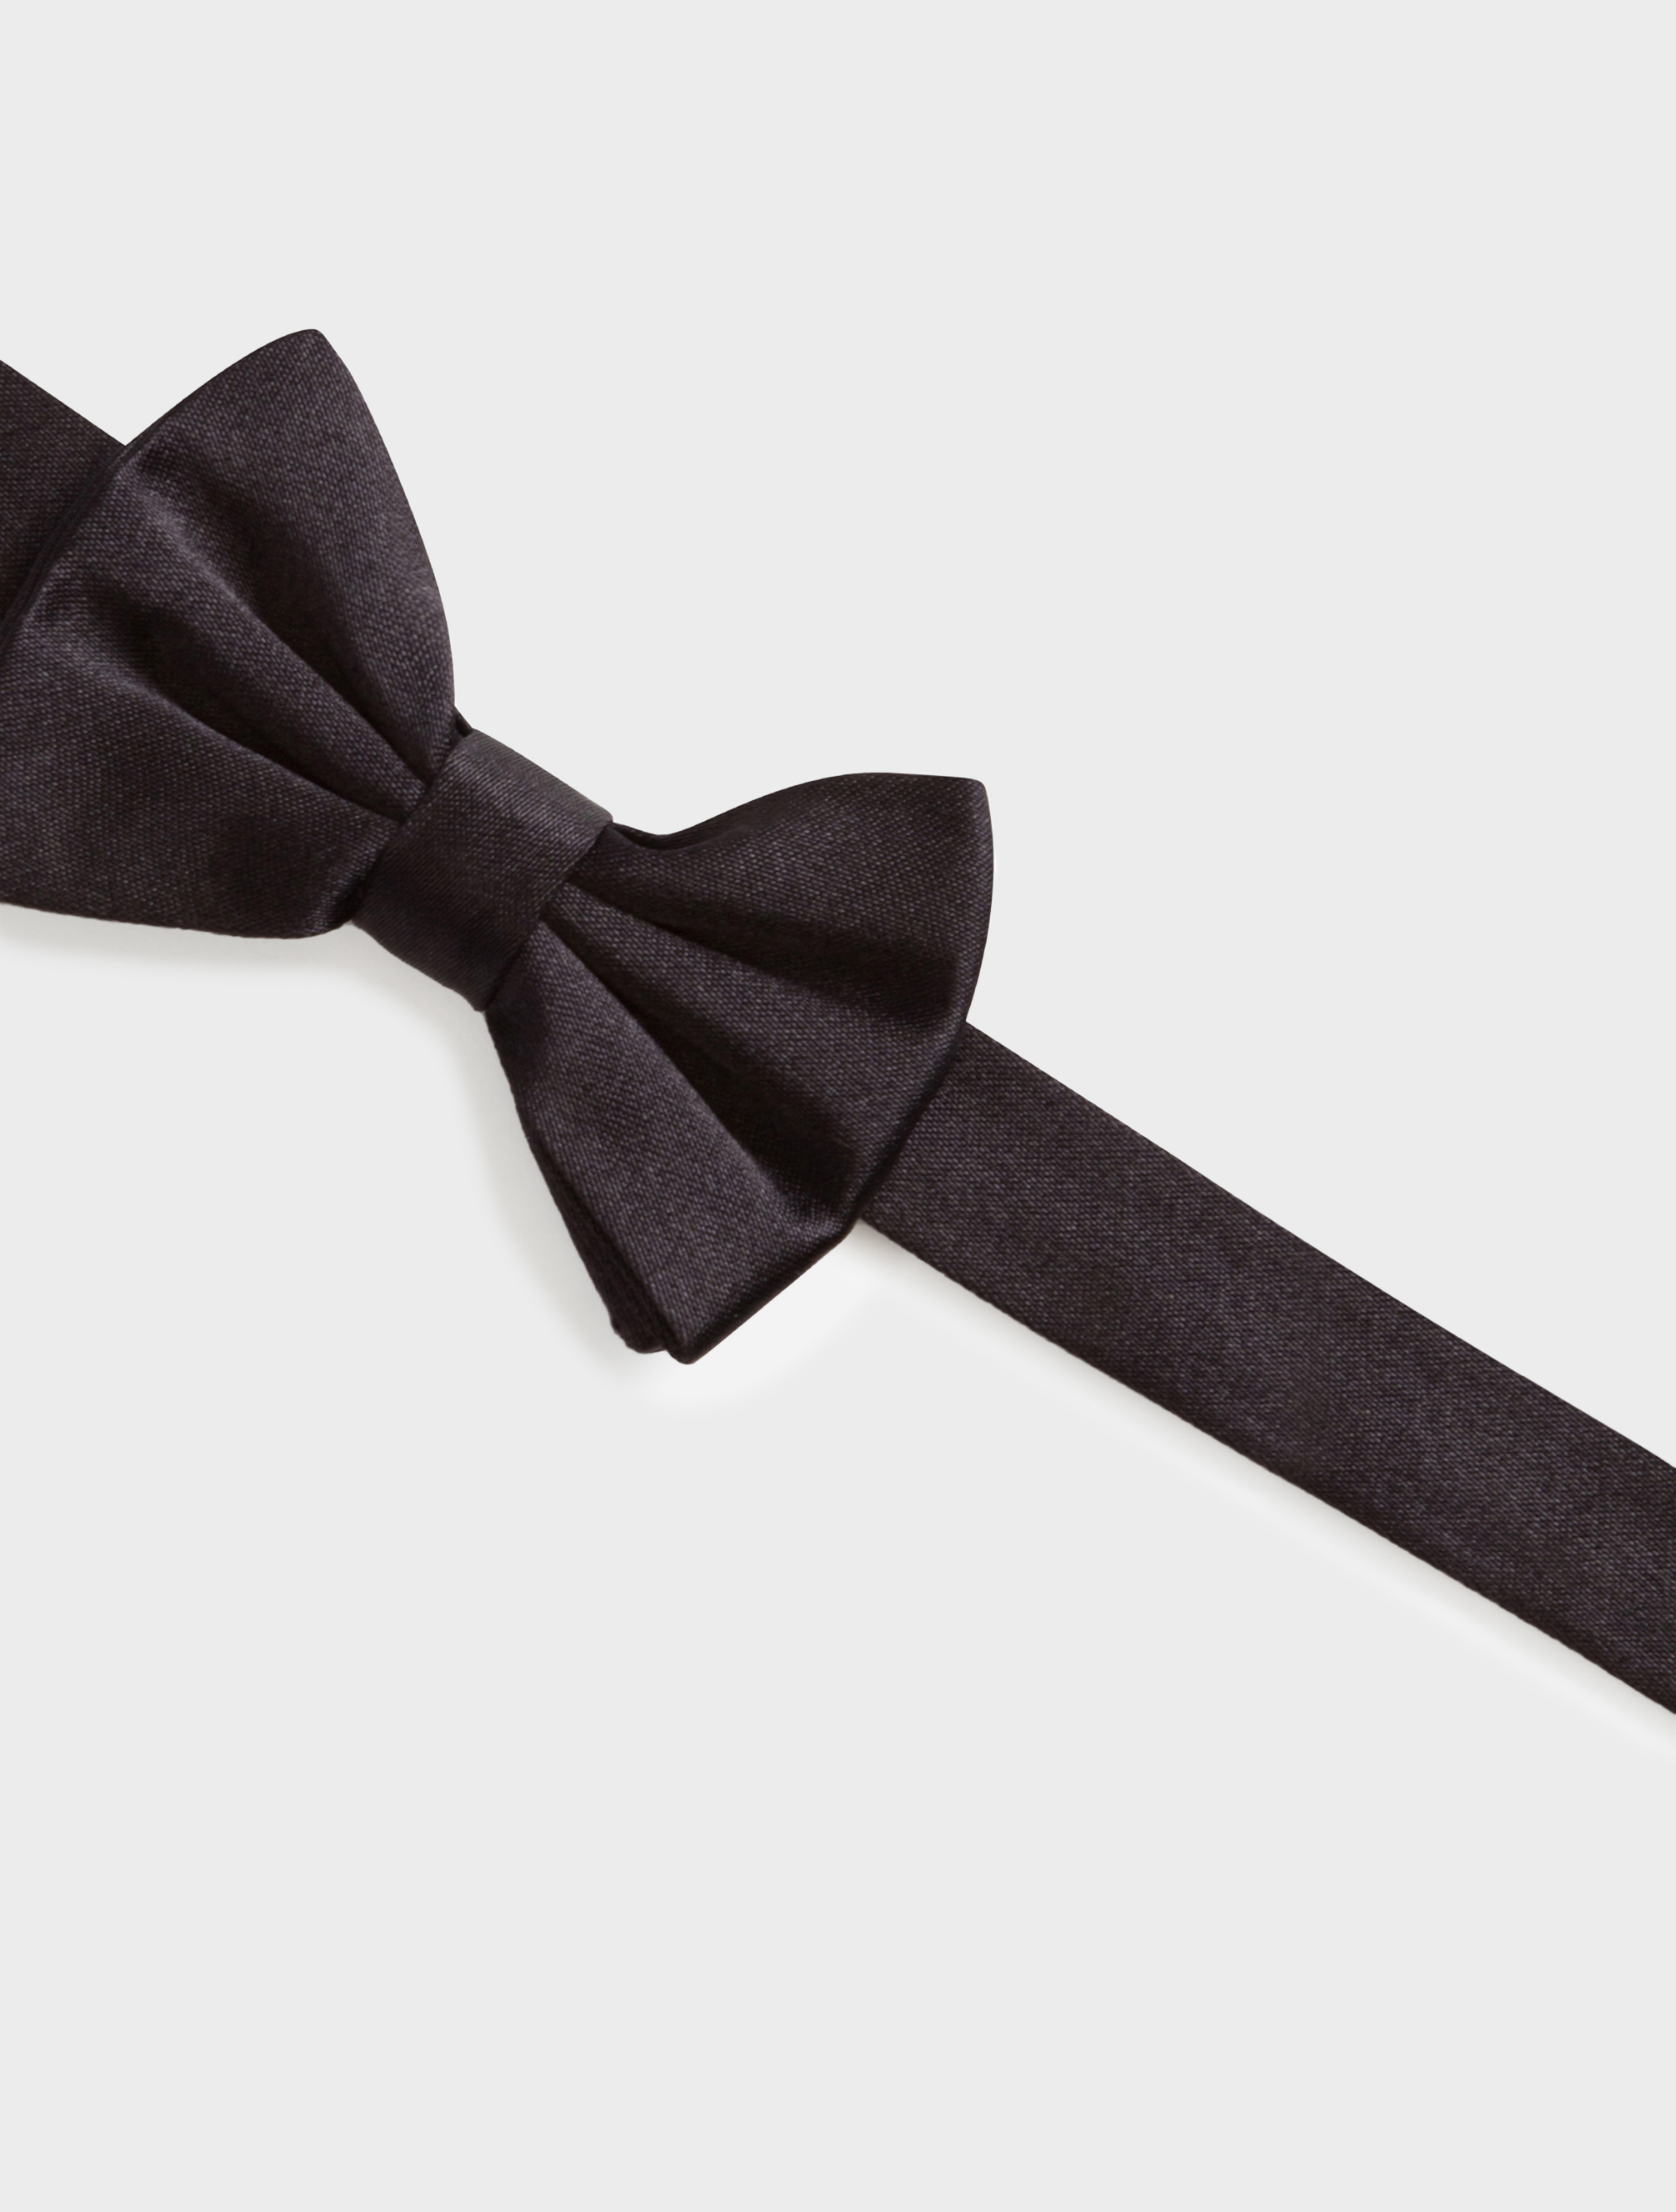 Silk bow tie in Black